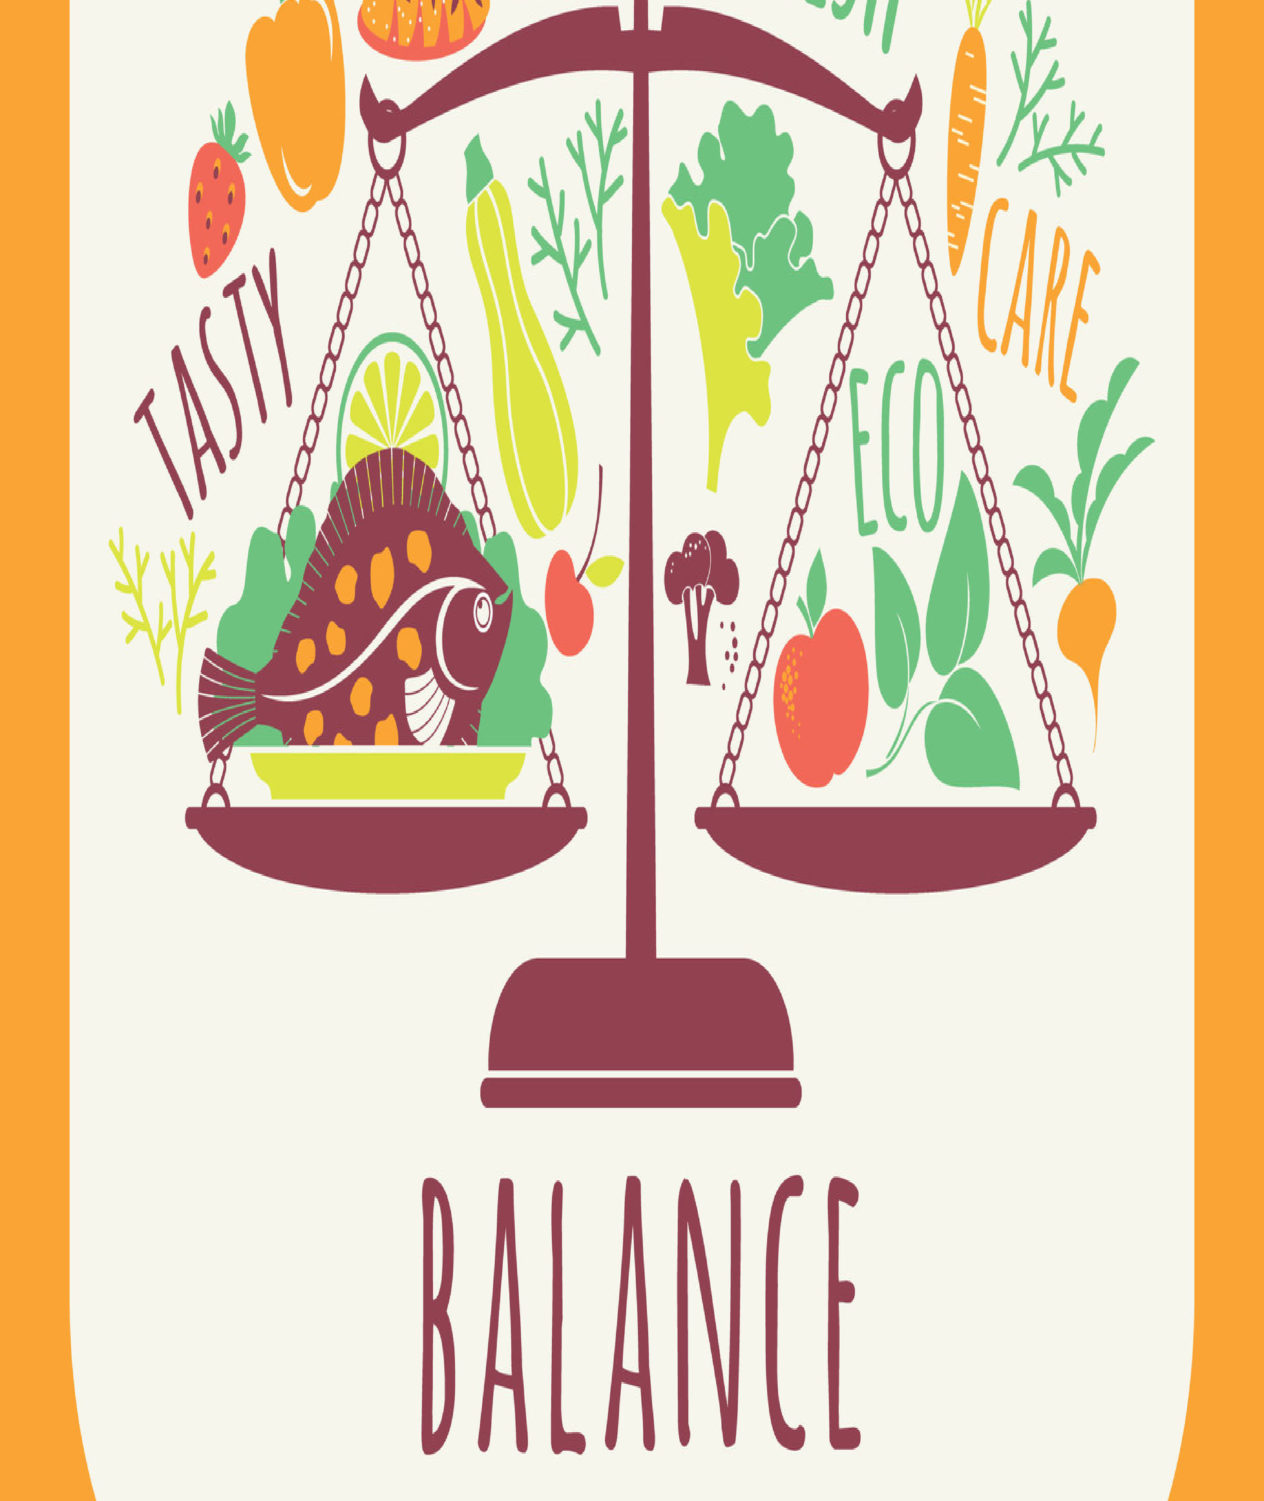 balanced diet | Connect Health